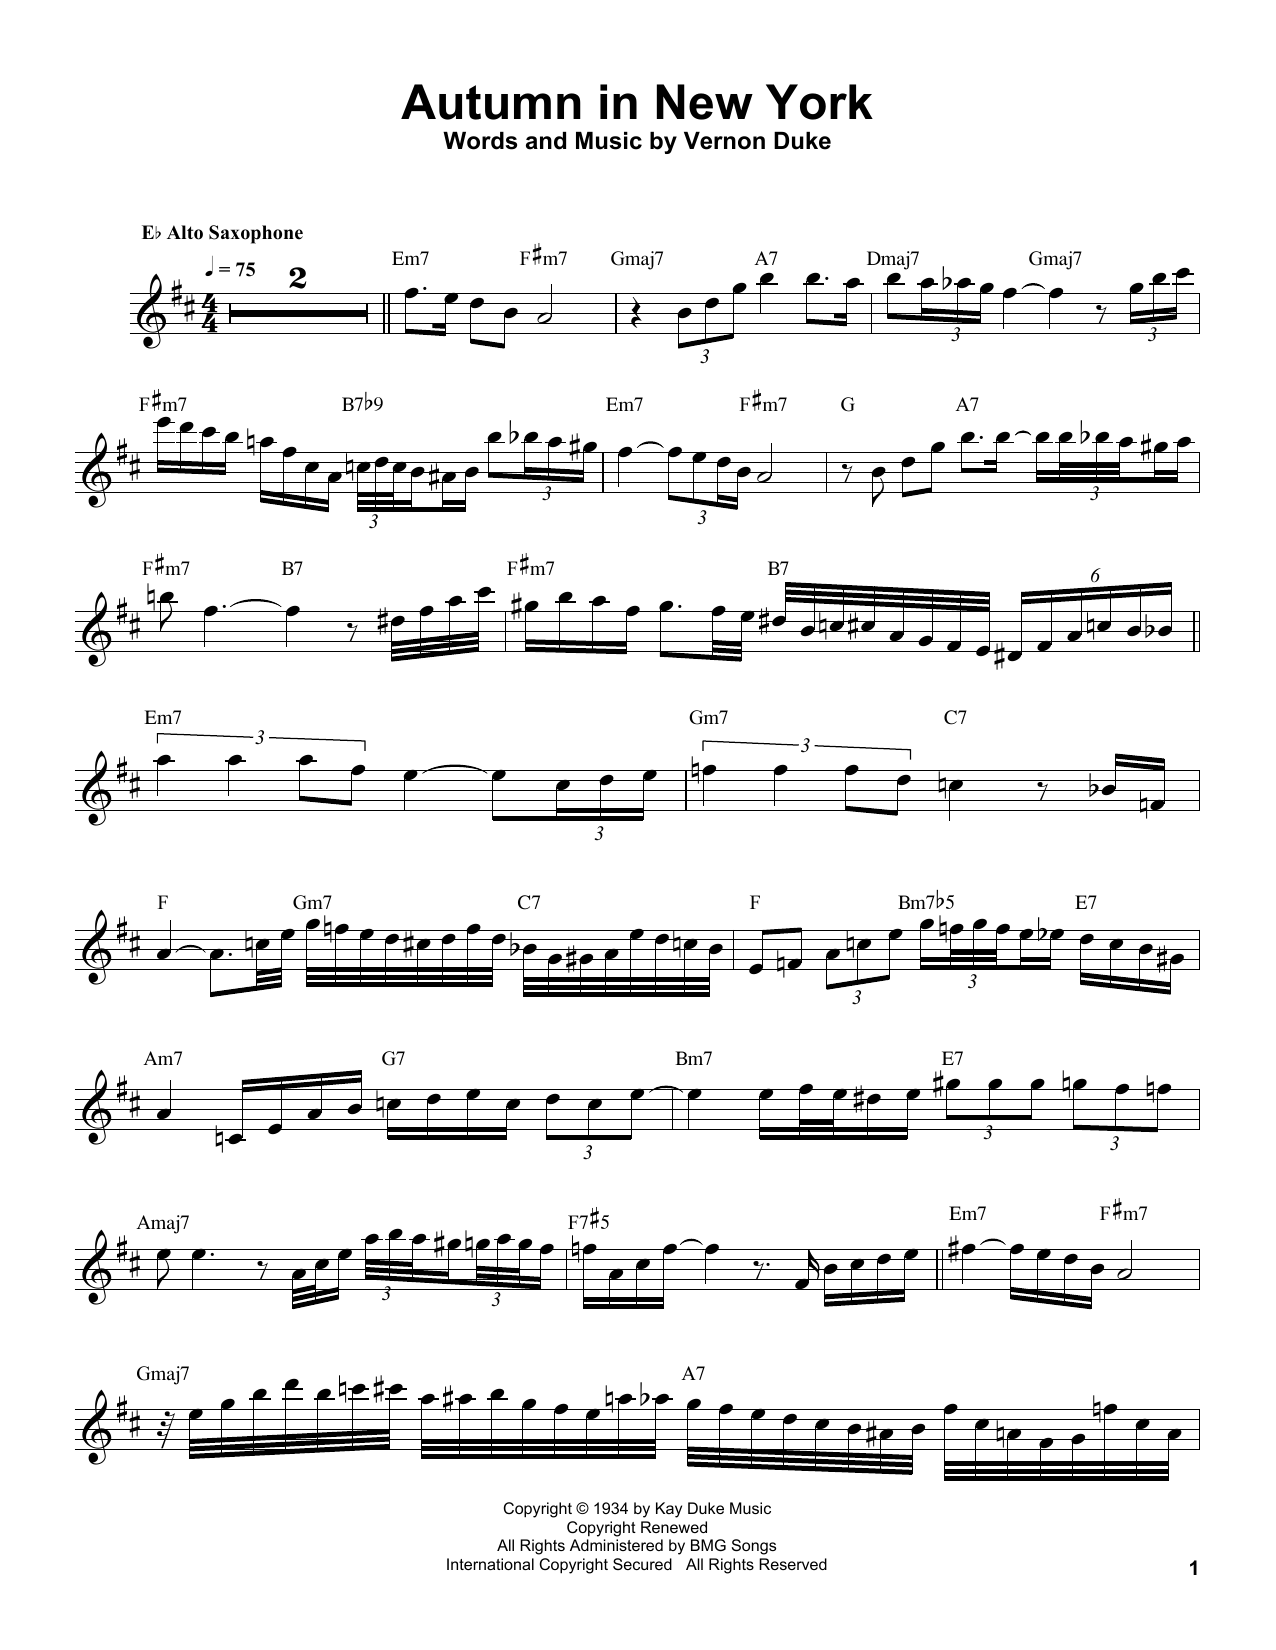 Sonny Stitt Autumn In New York Sheet Music Notes & Chords for Tenor Sax Transcription - Download or Print PDF